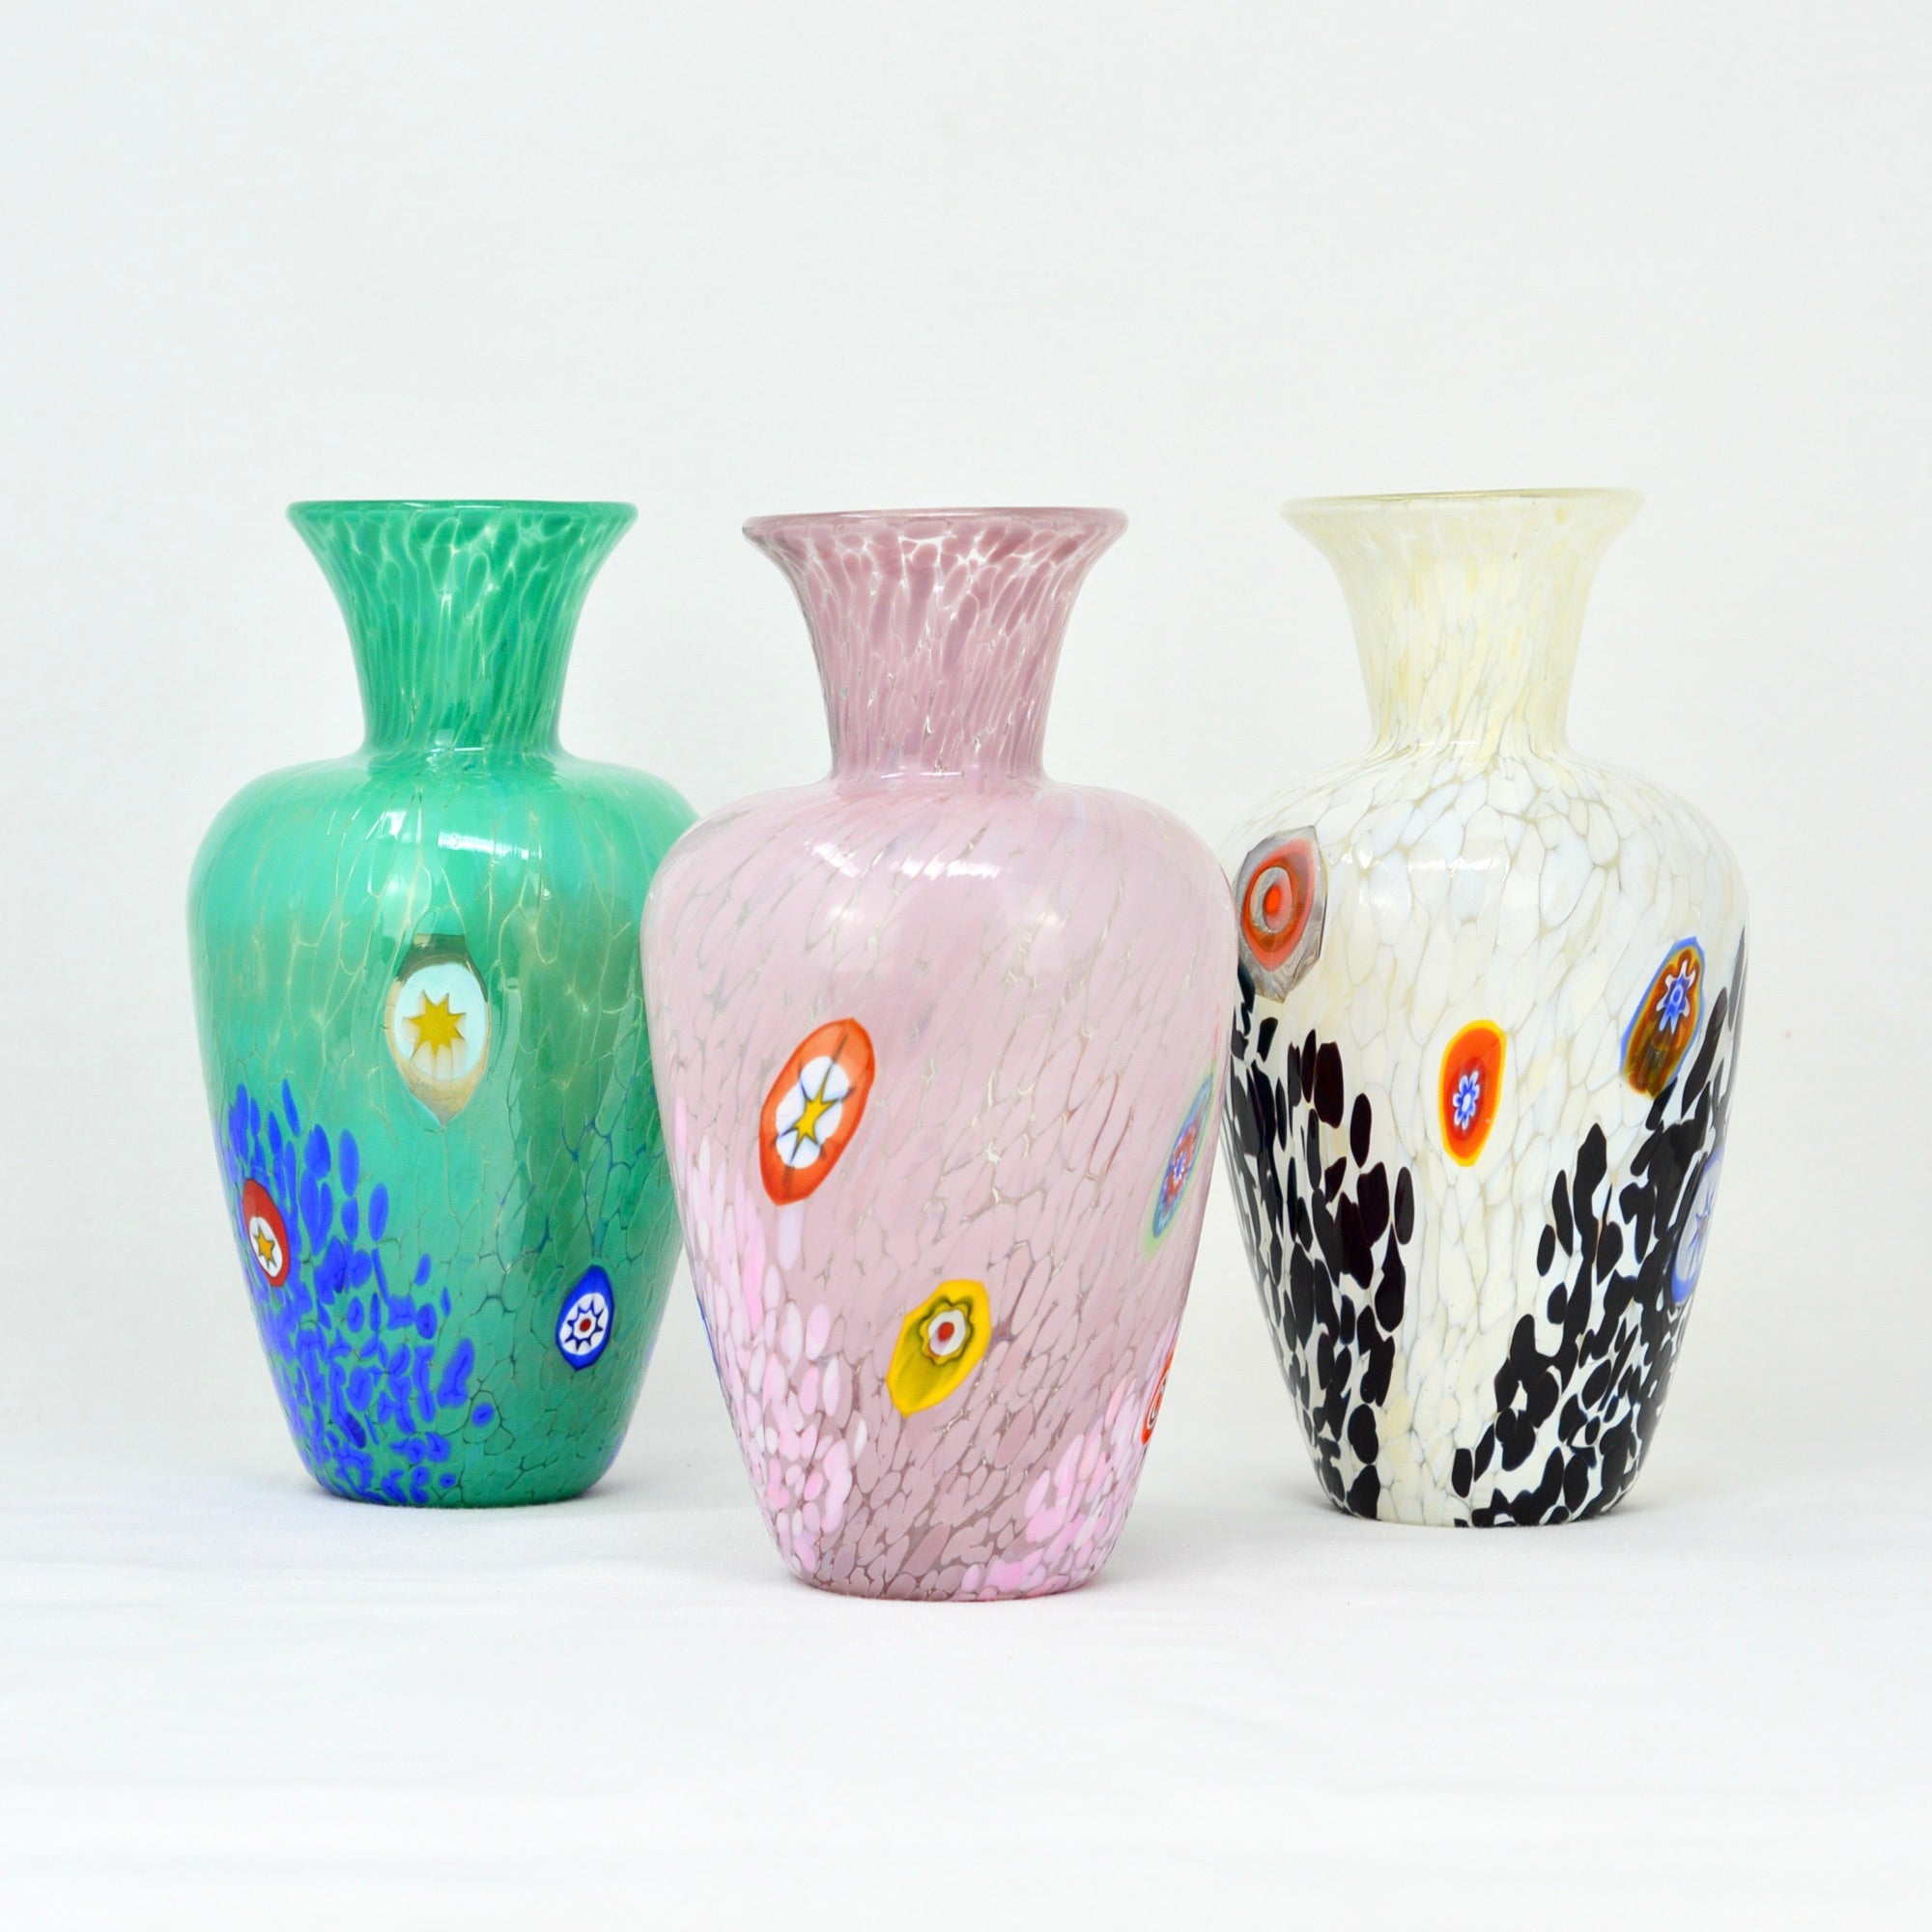 Amphora Large Vase, Handblown Millefiori Murano Glass, Made in Italy - My Italian Decor